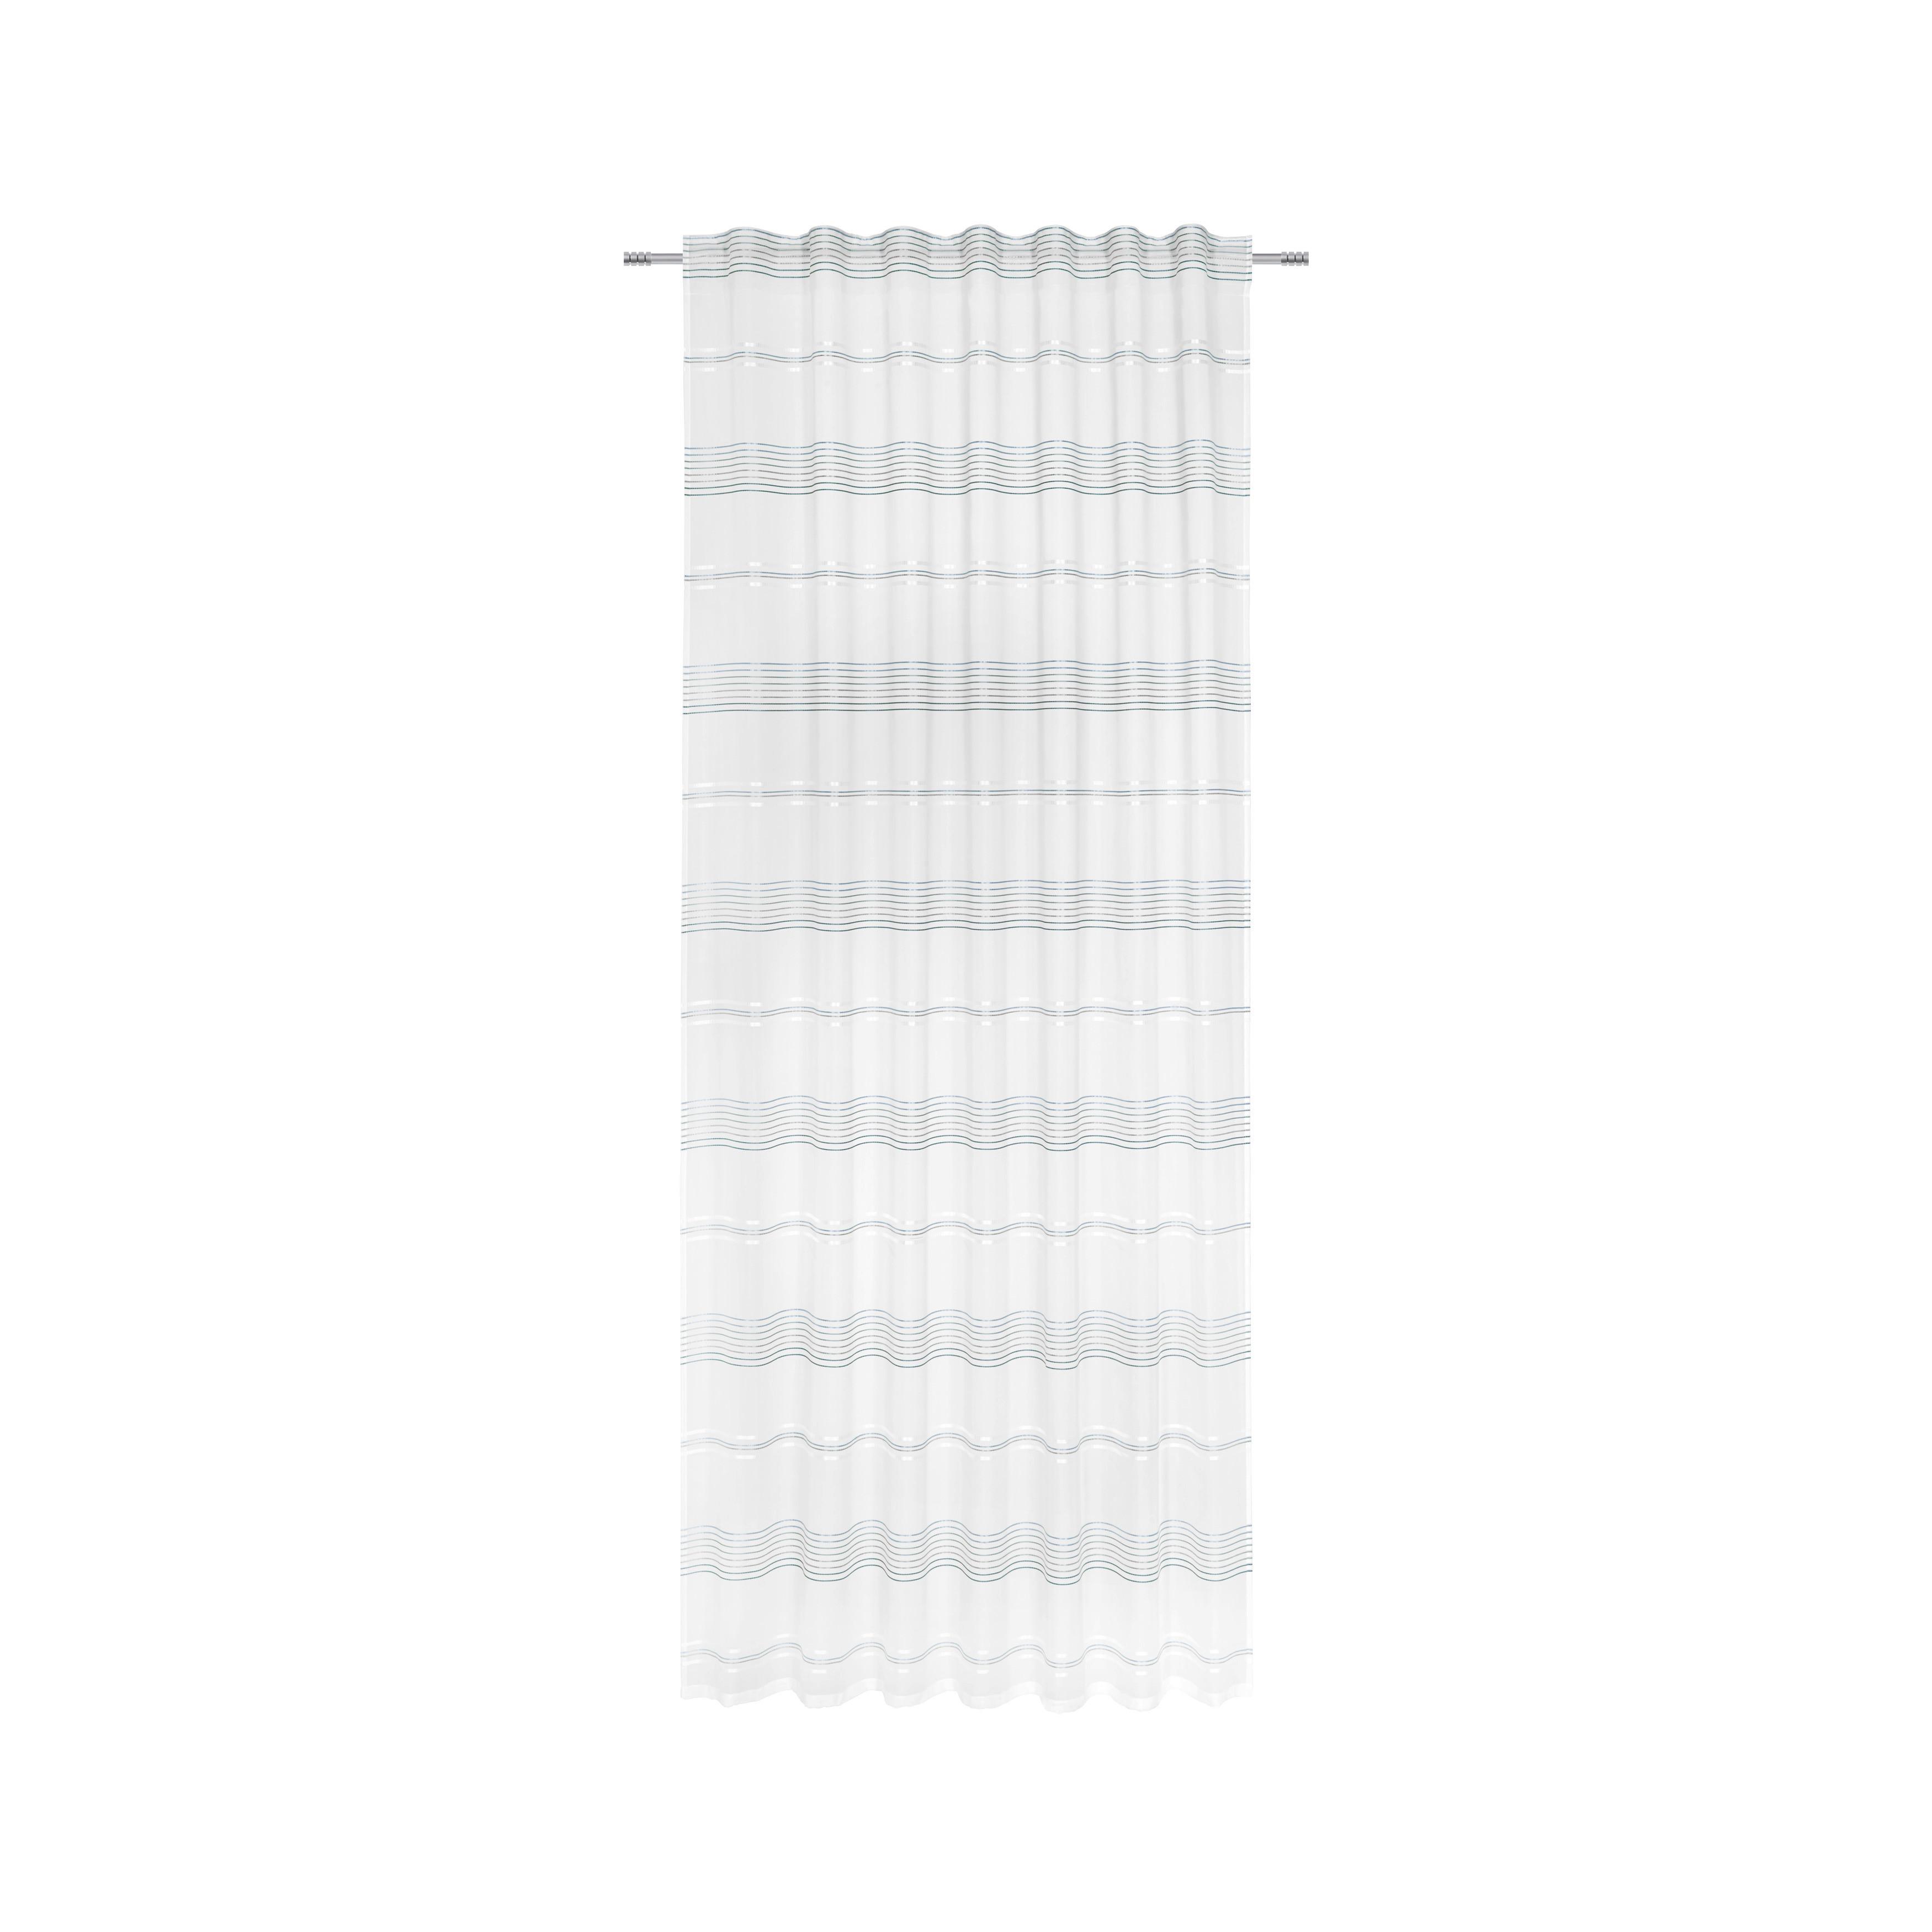 Fertigvorhang Louis ca. 140x245cm - Jadegrün/Weiß, KONVENTIONELL, Textil (140/245cm) - Modern Living